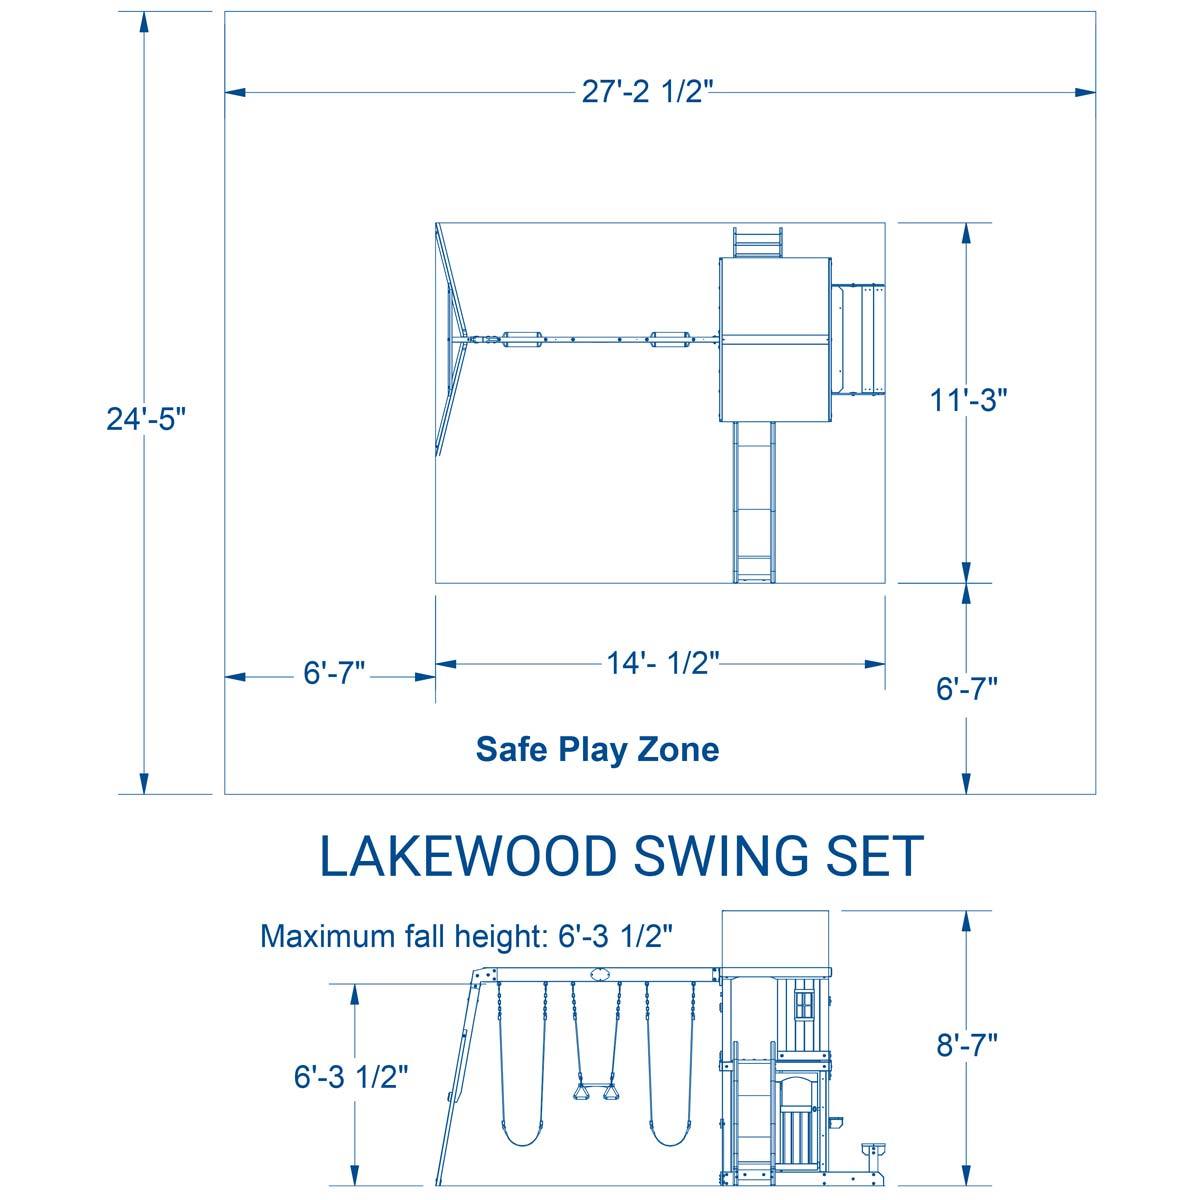 The Lakewood Swing set playcenter line drawing